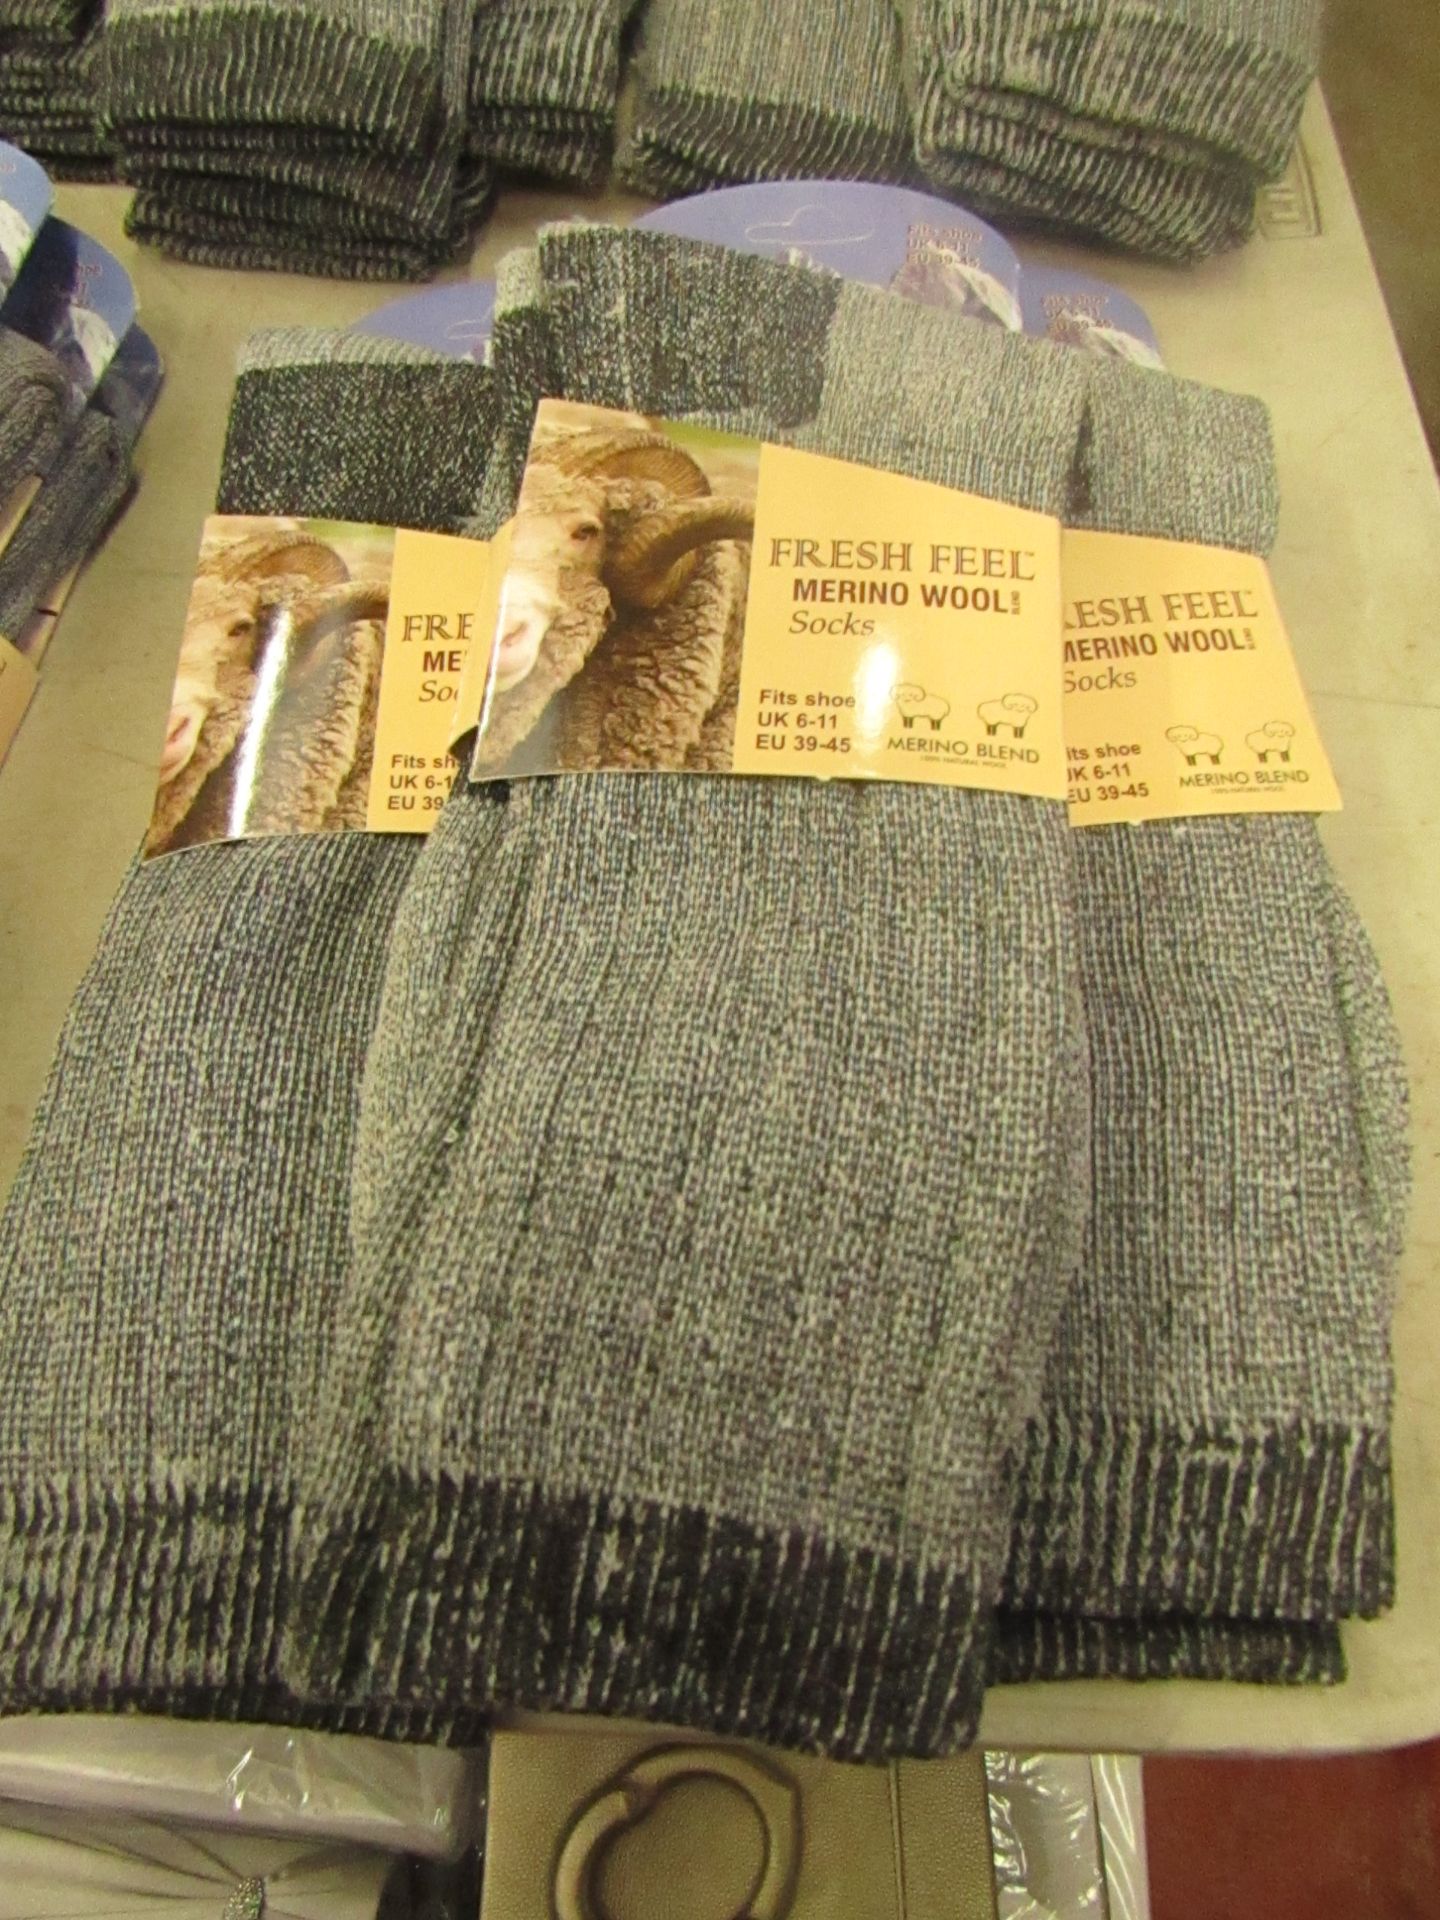 3 x pairs Fresh Feel Merino Wool Socks size 6-11 new & packaged